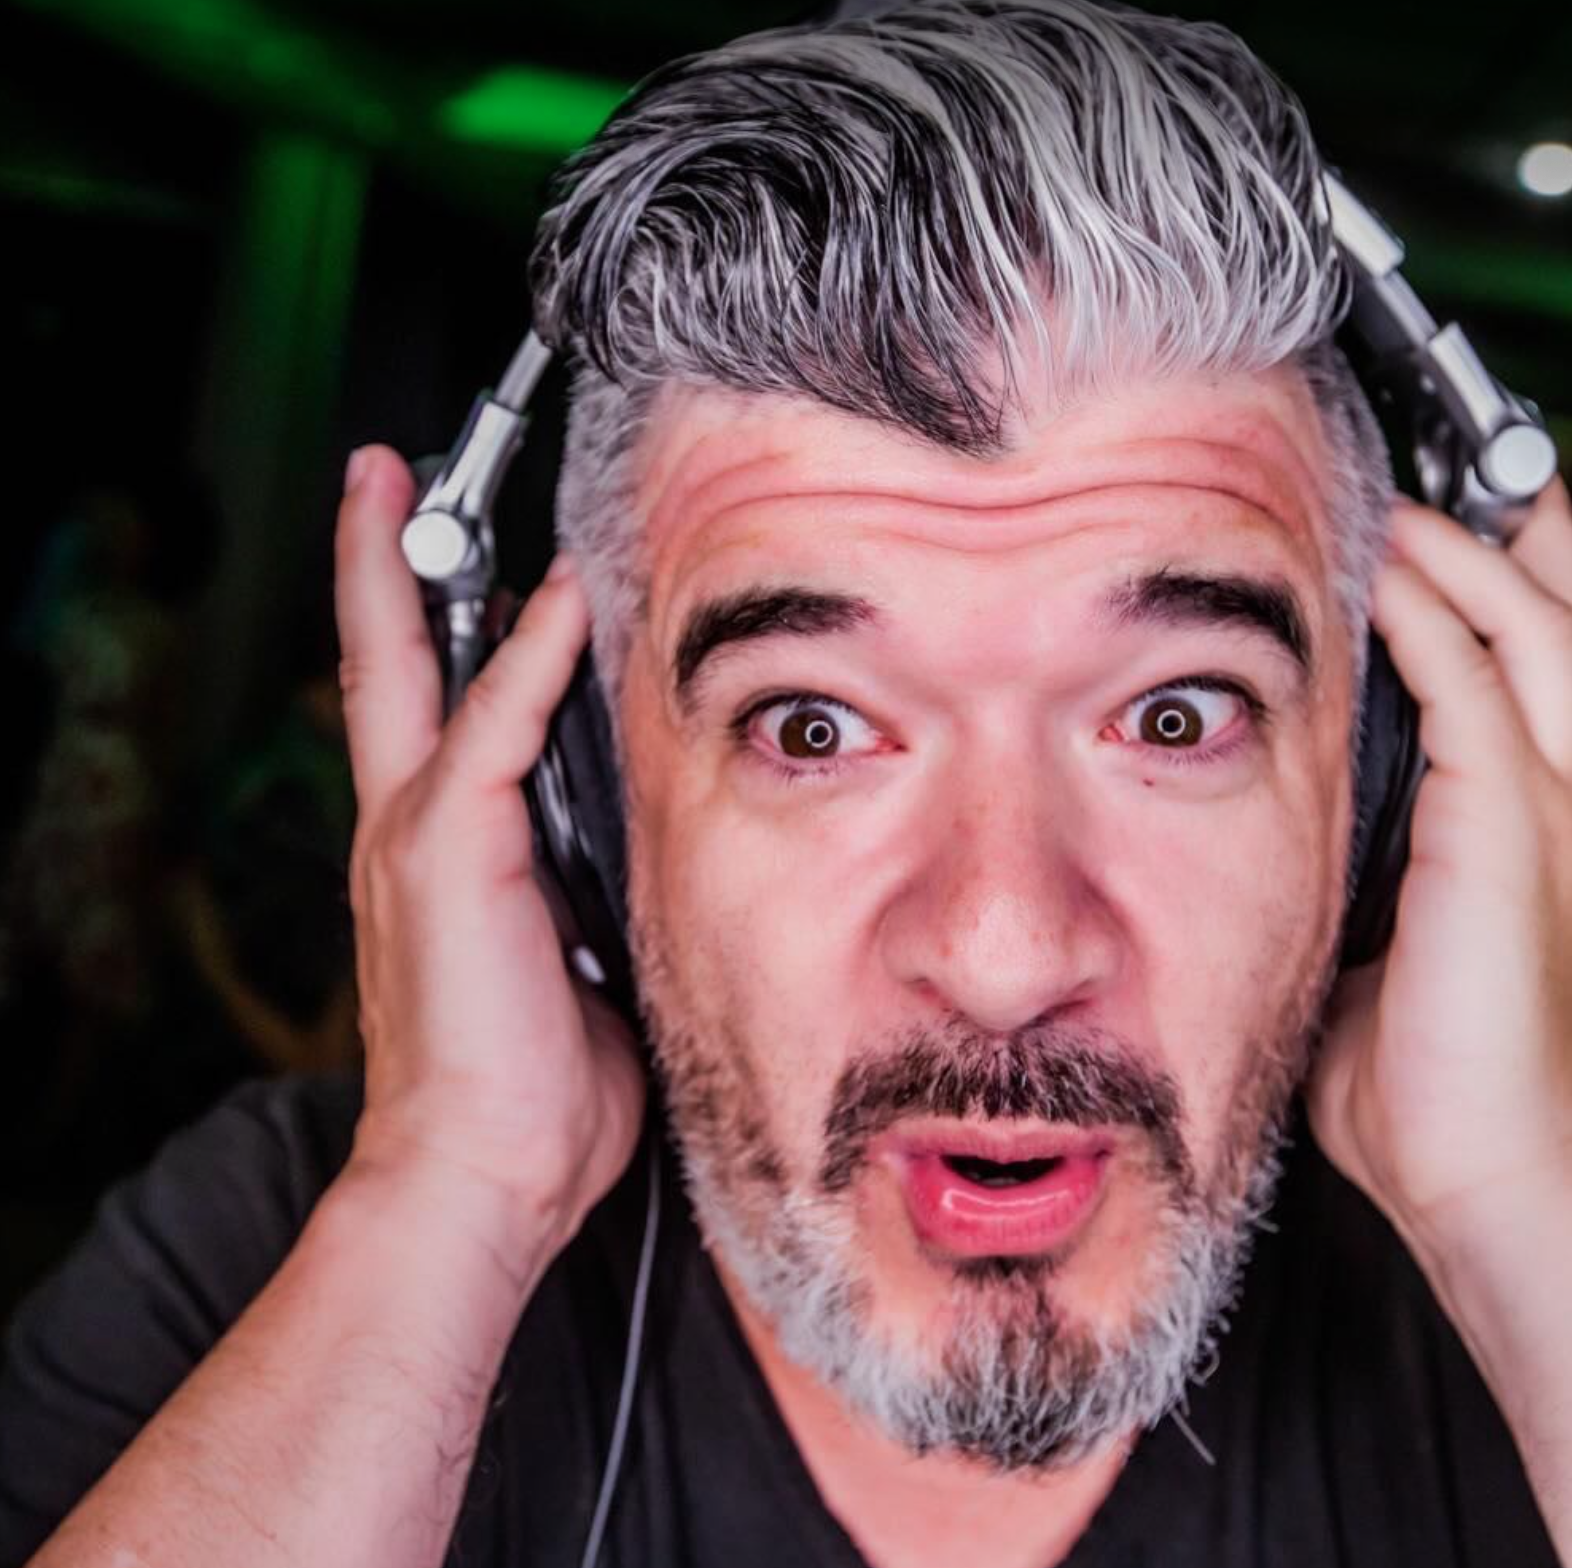 DJ Luis Guitterez